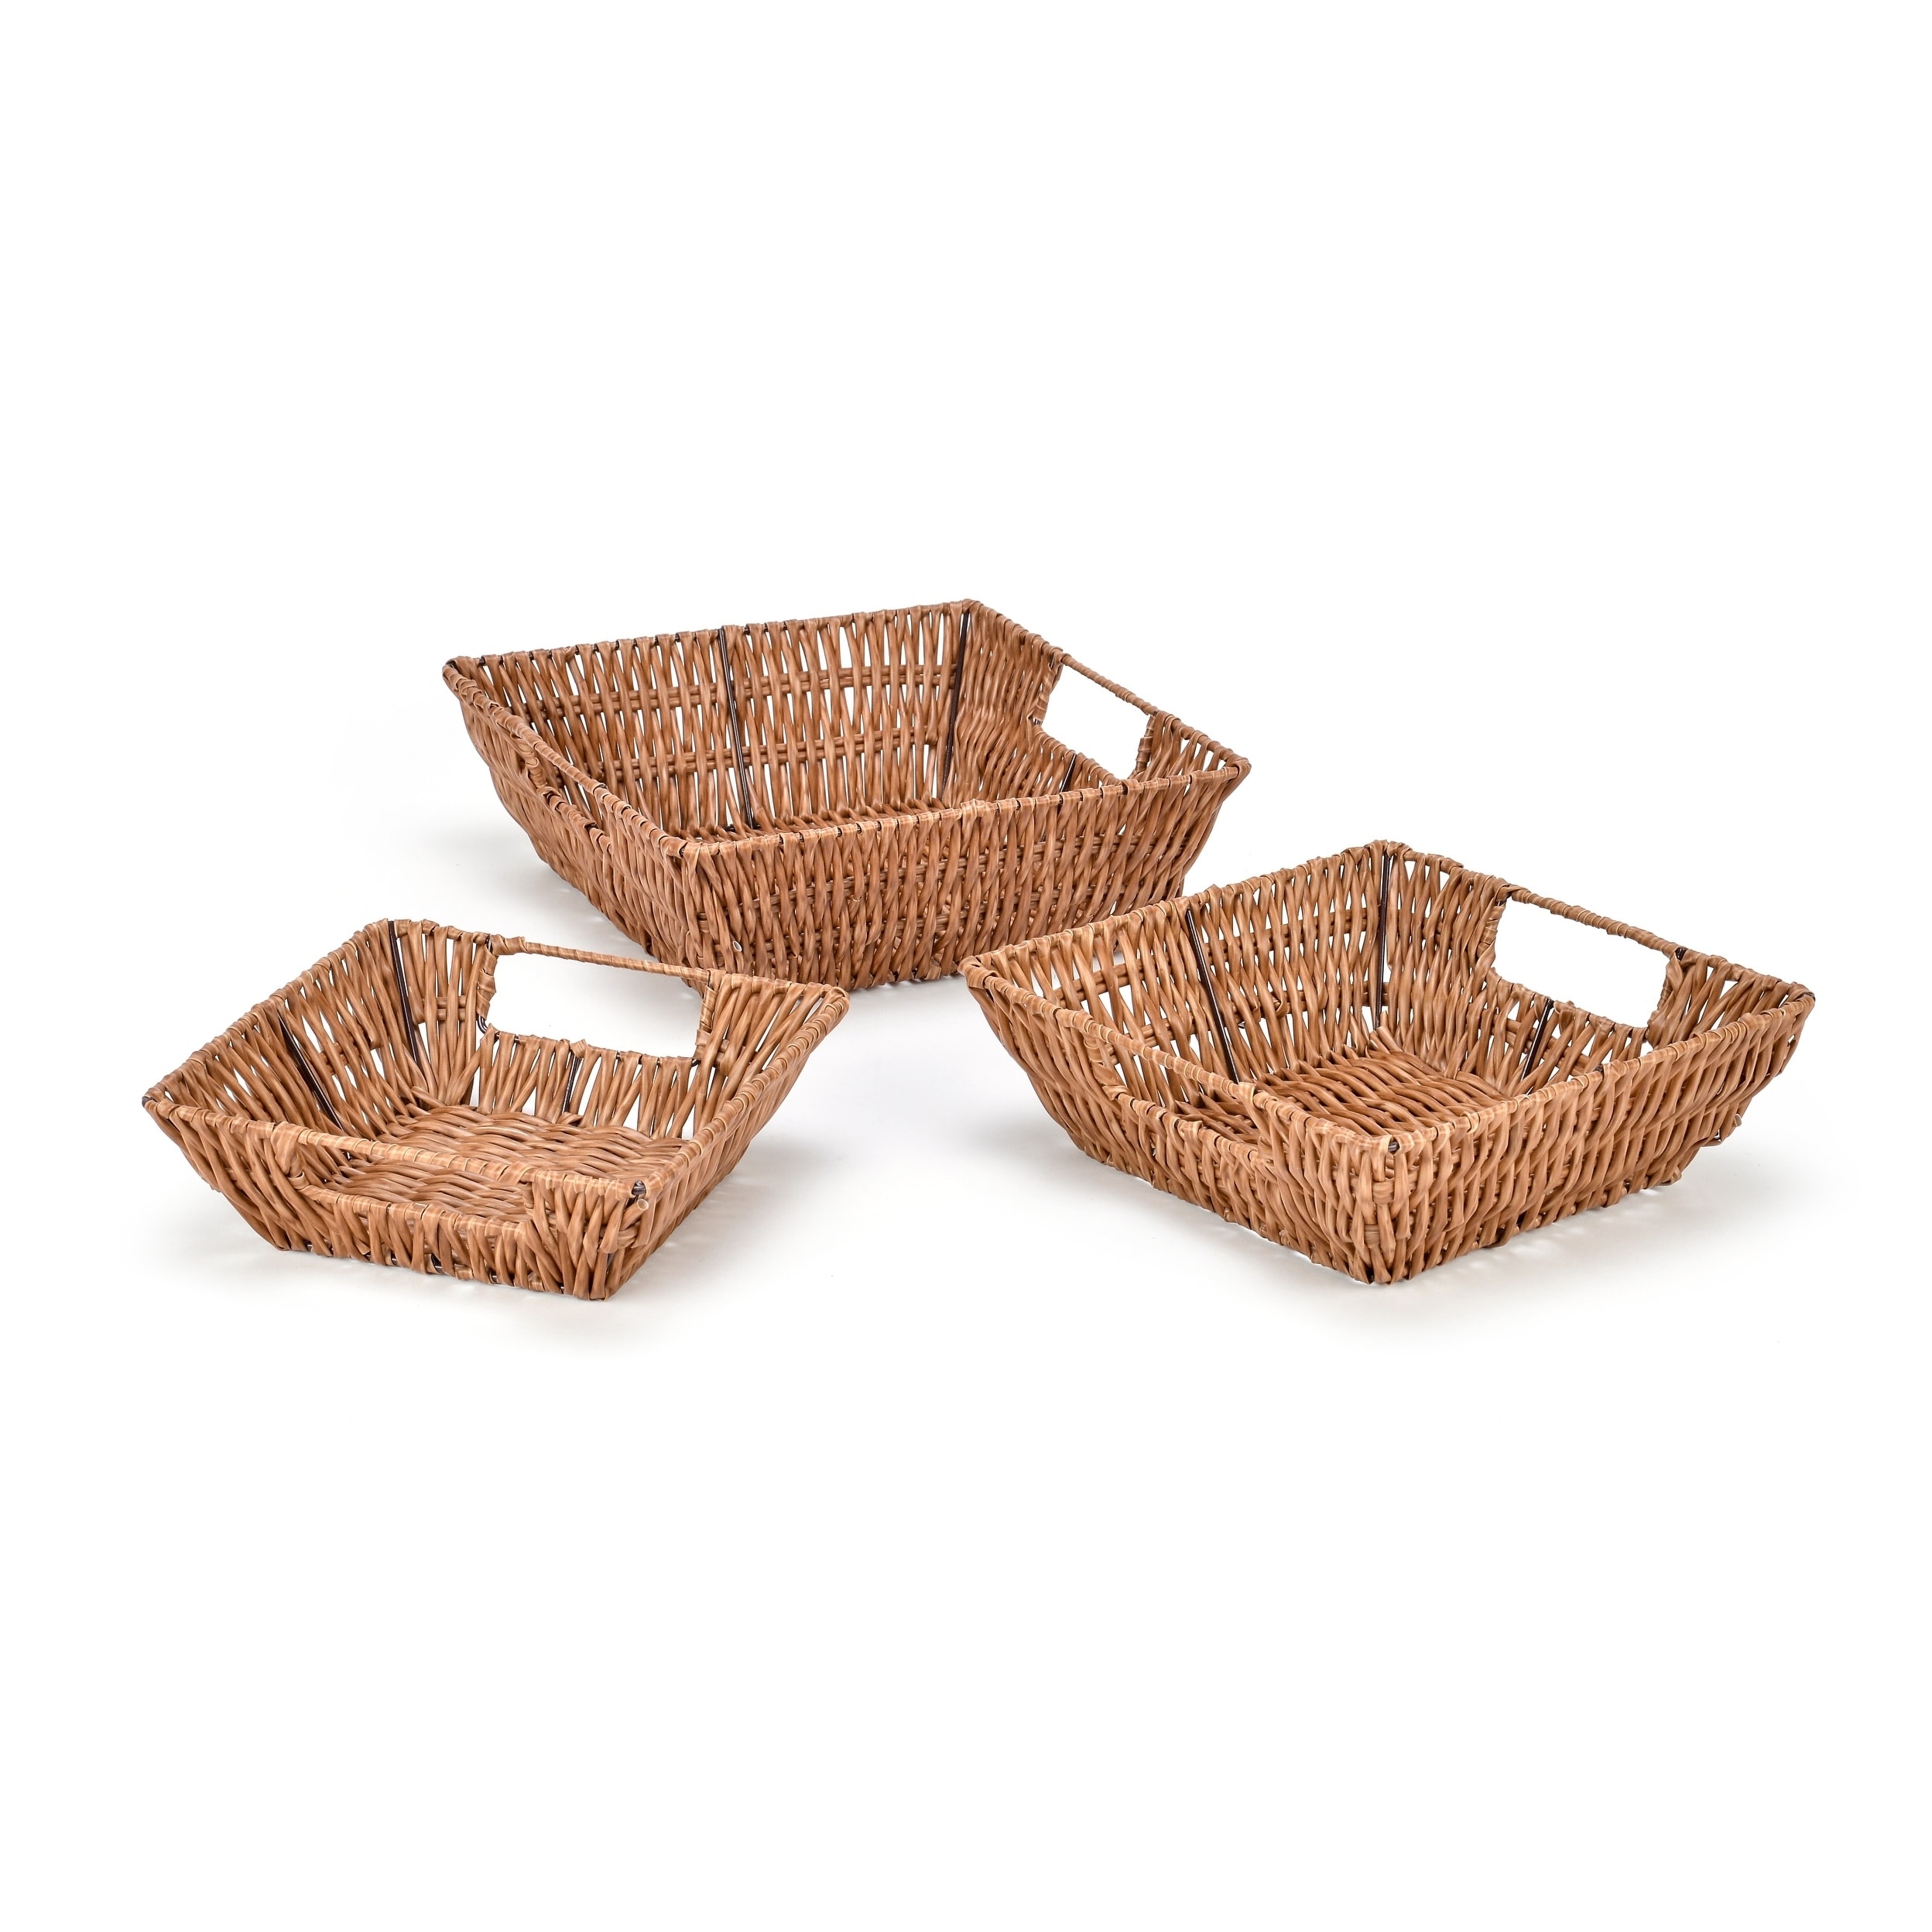 1.33 G White Rectangular Plastic Shelf Organizer Basket with Handles Set of  3